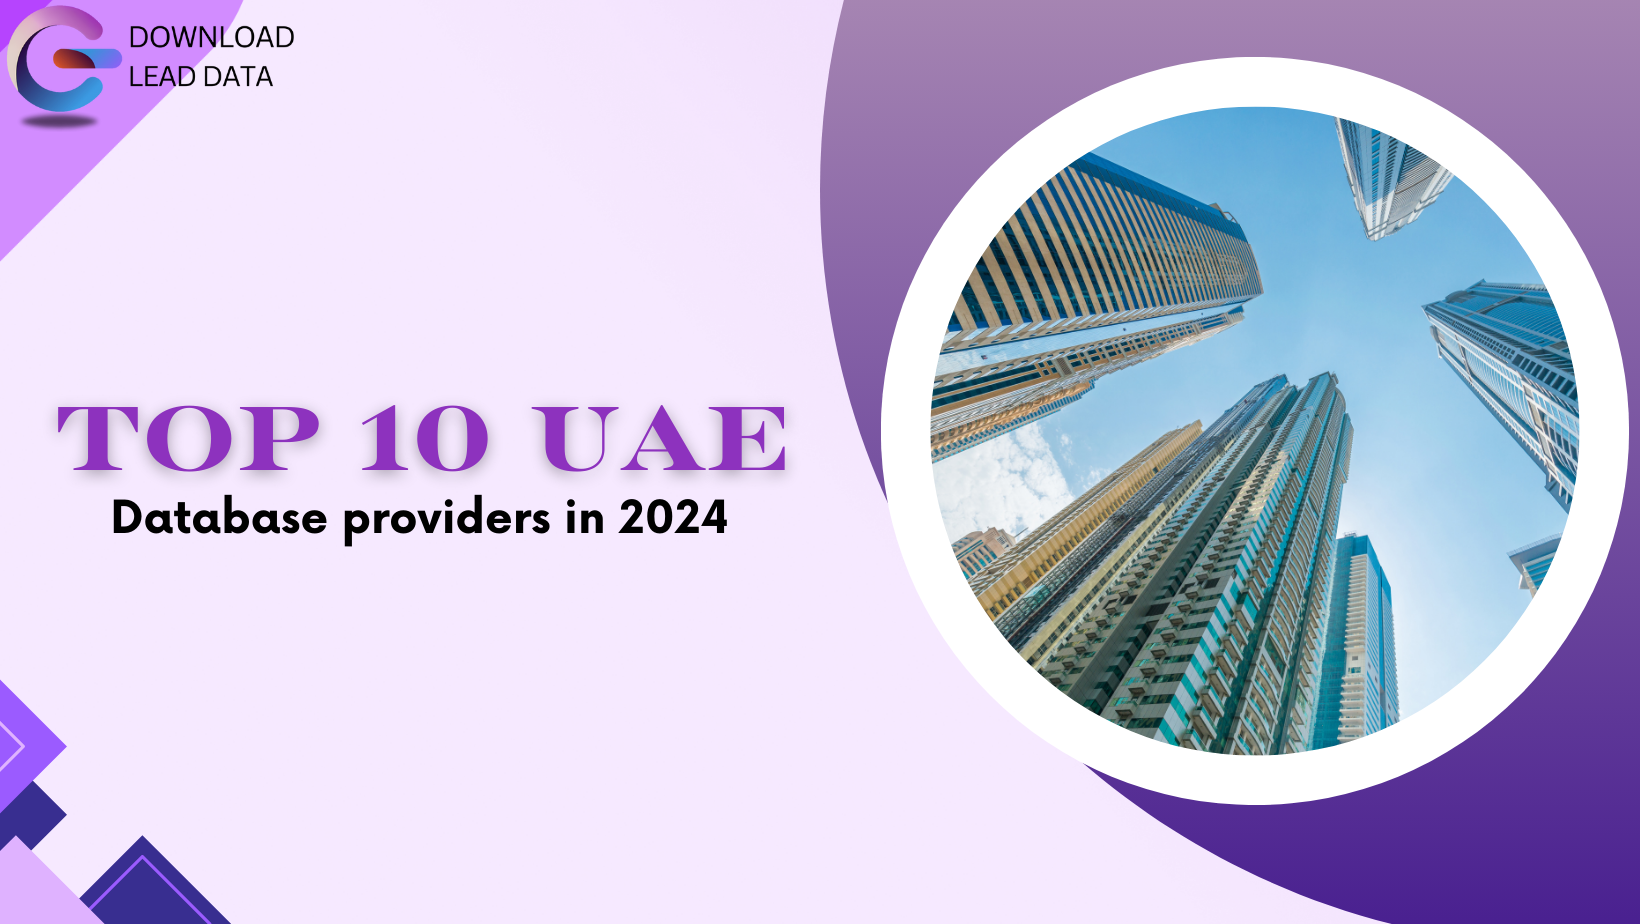 Top 10 UAE database providers in 2024 by DLD